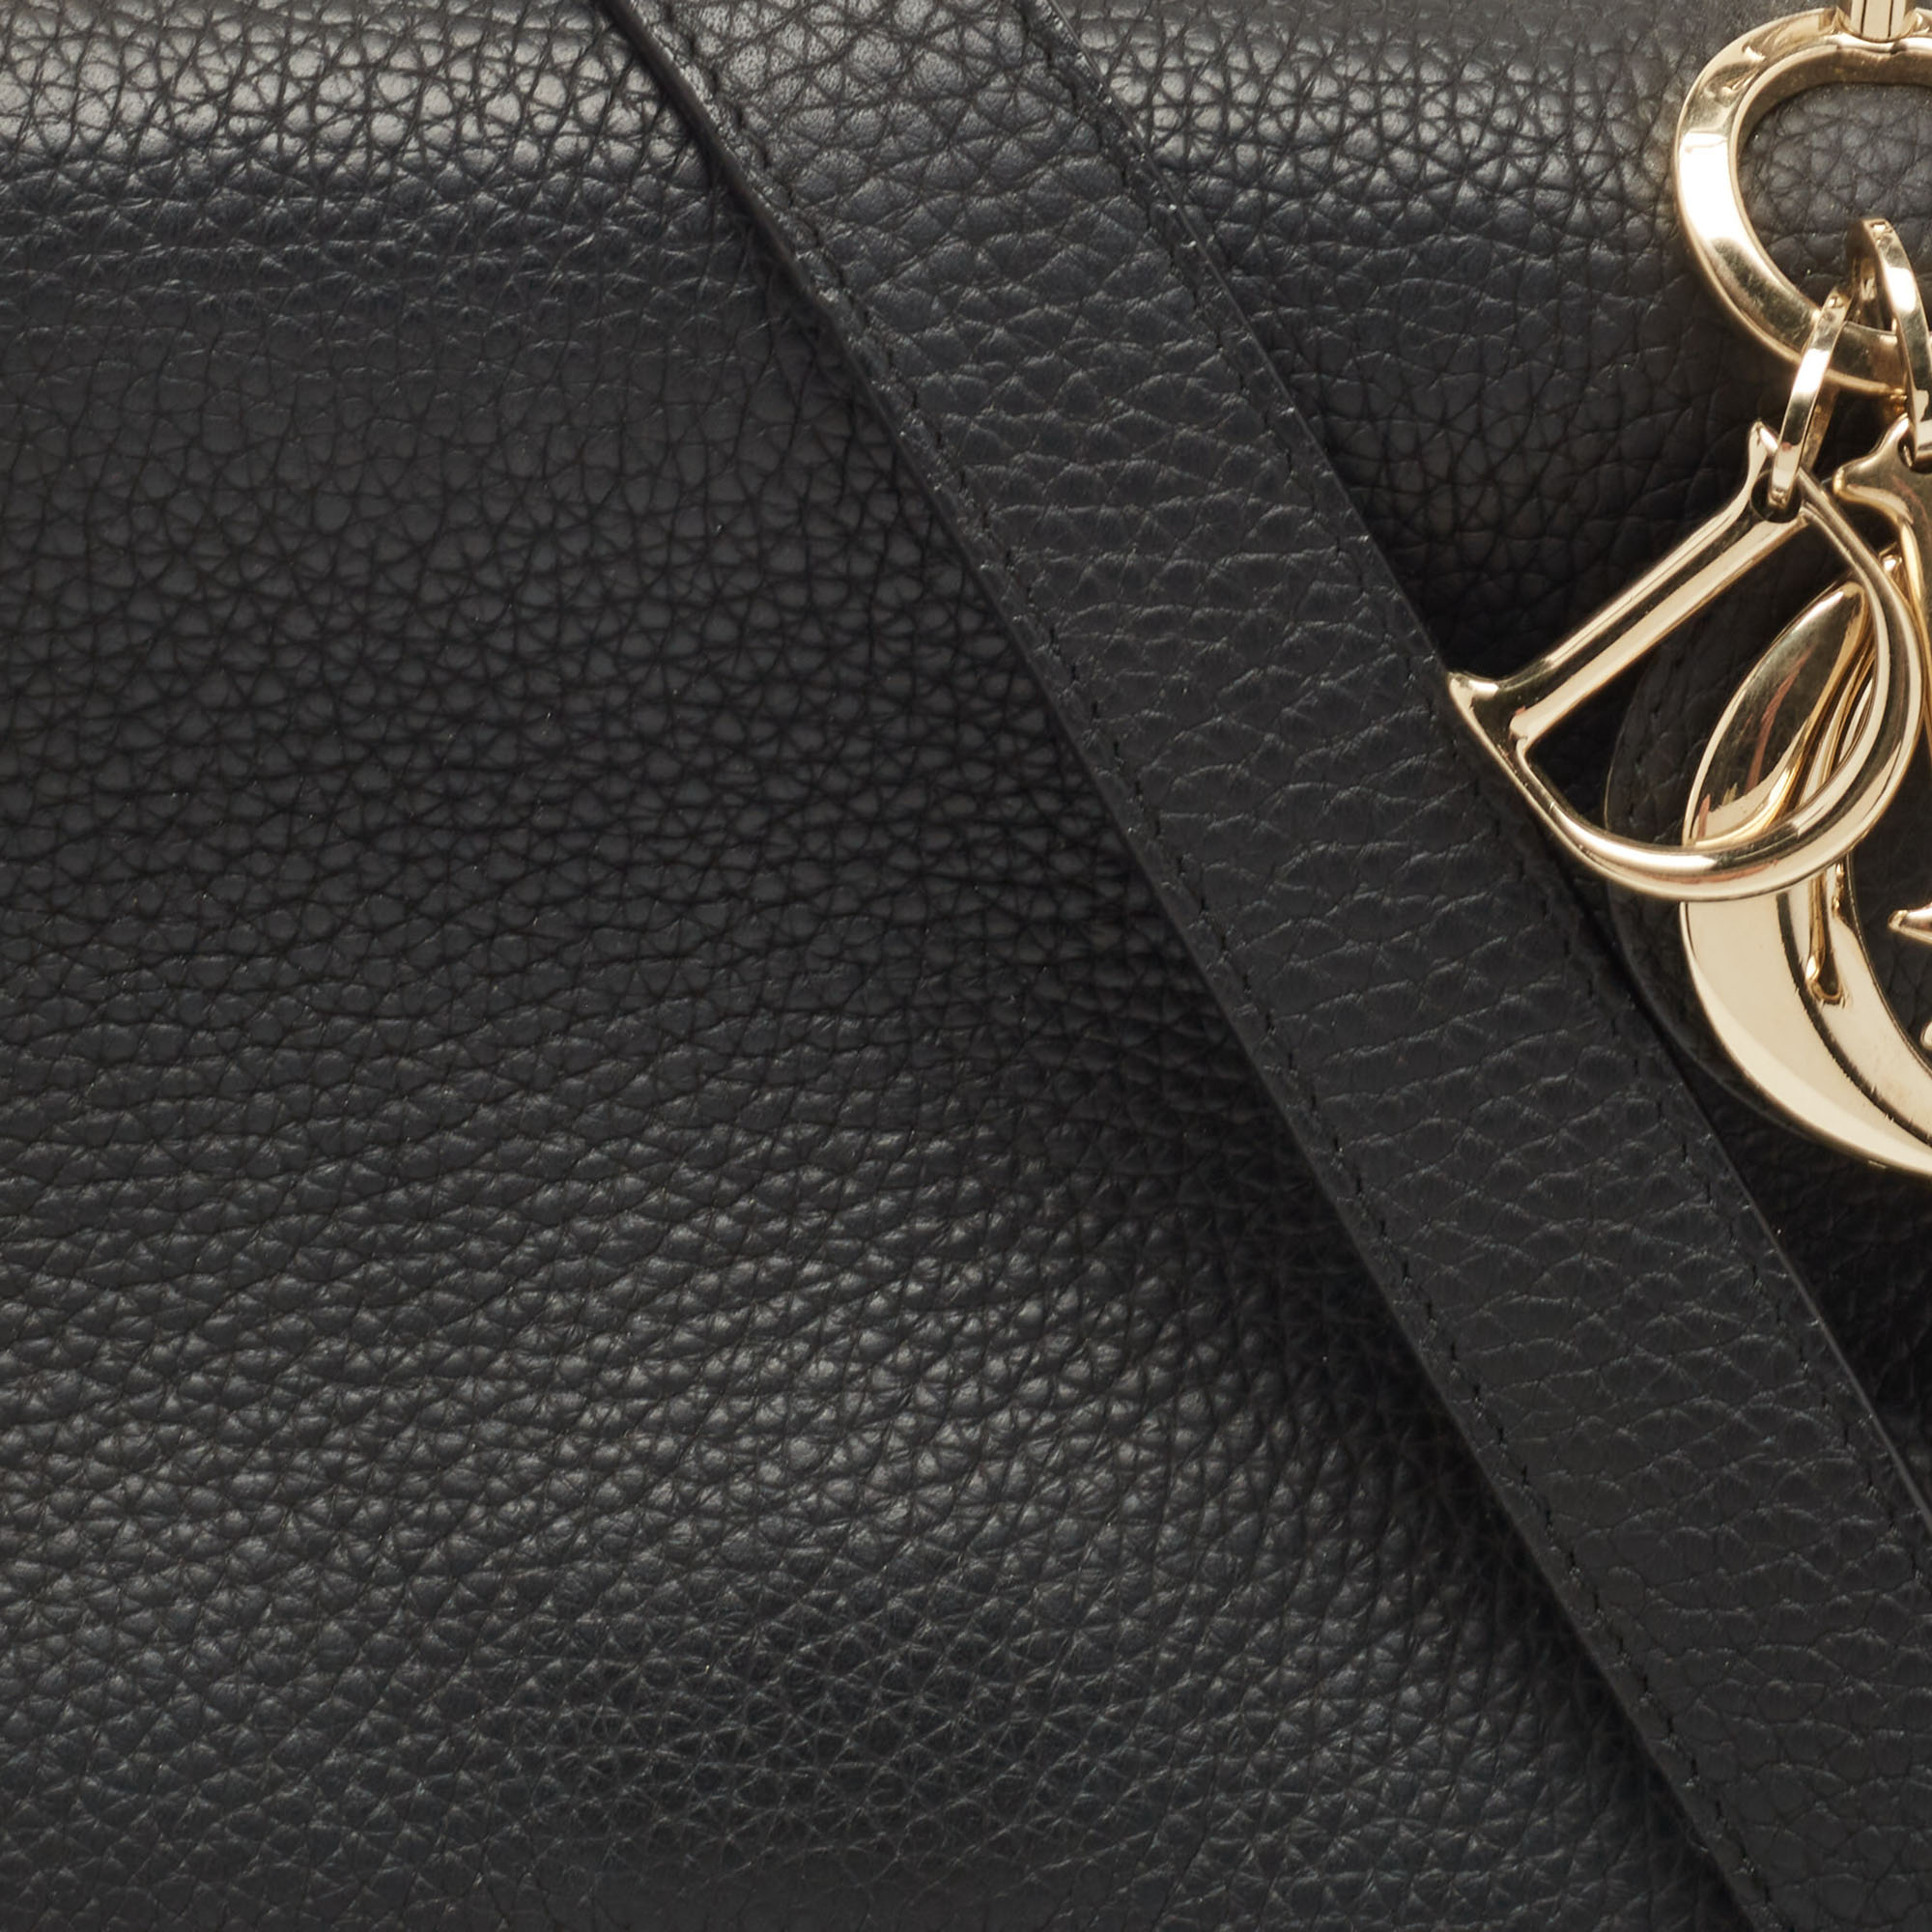 Dior Black Leather Medium Be Dior Flap Top Handle Bag